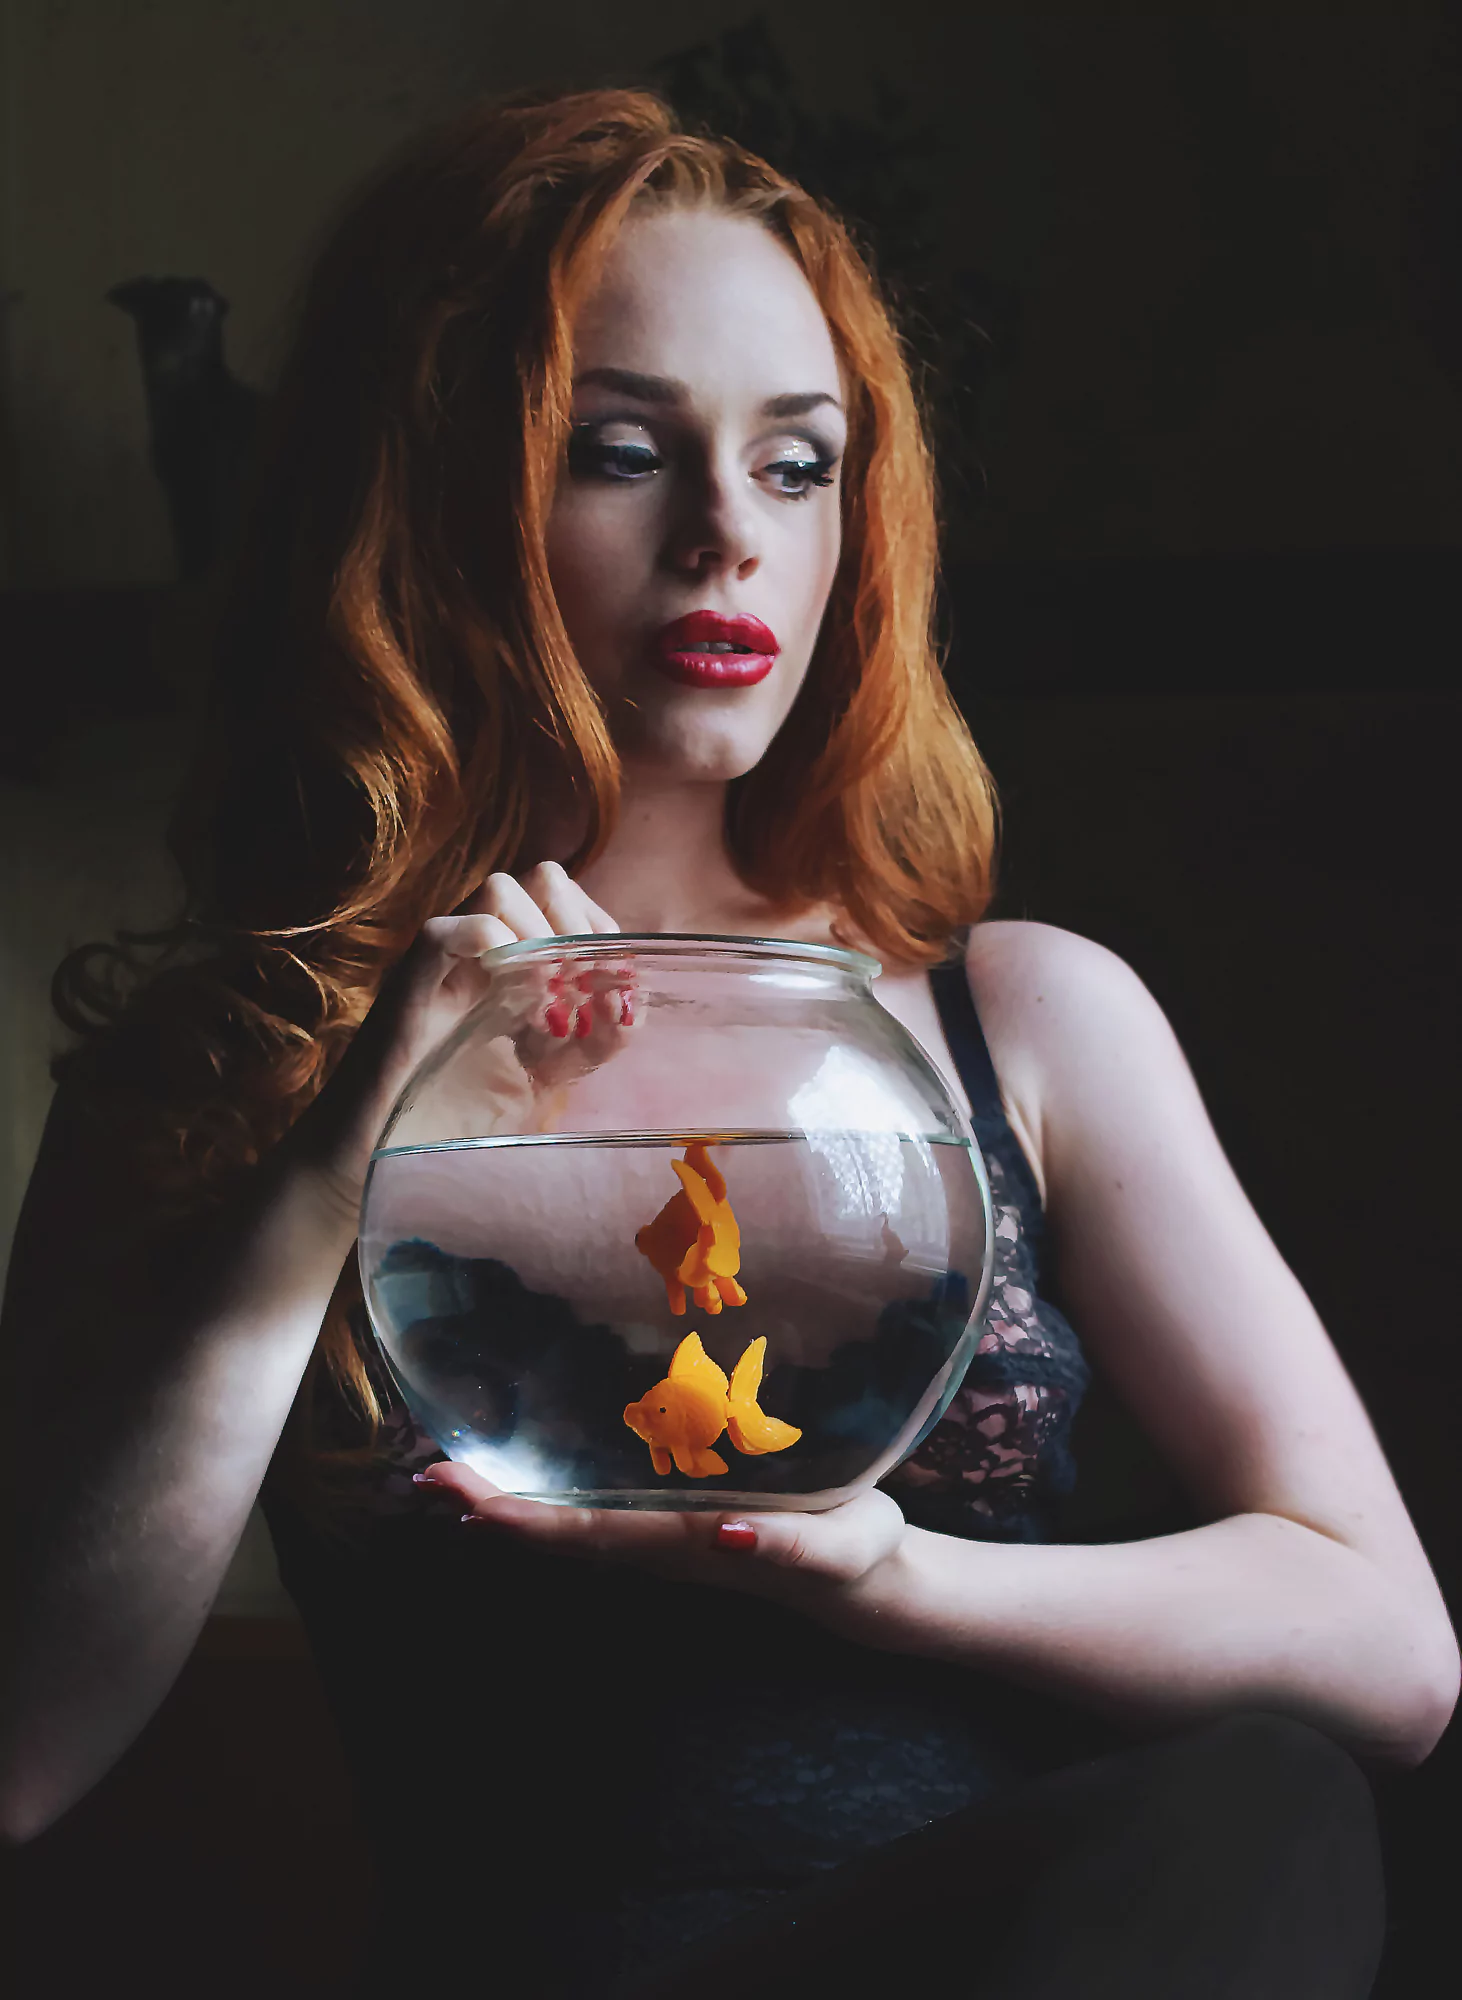 Gold Fish by Mara Linden, Photography, Digital